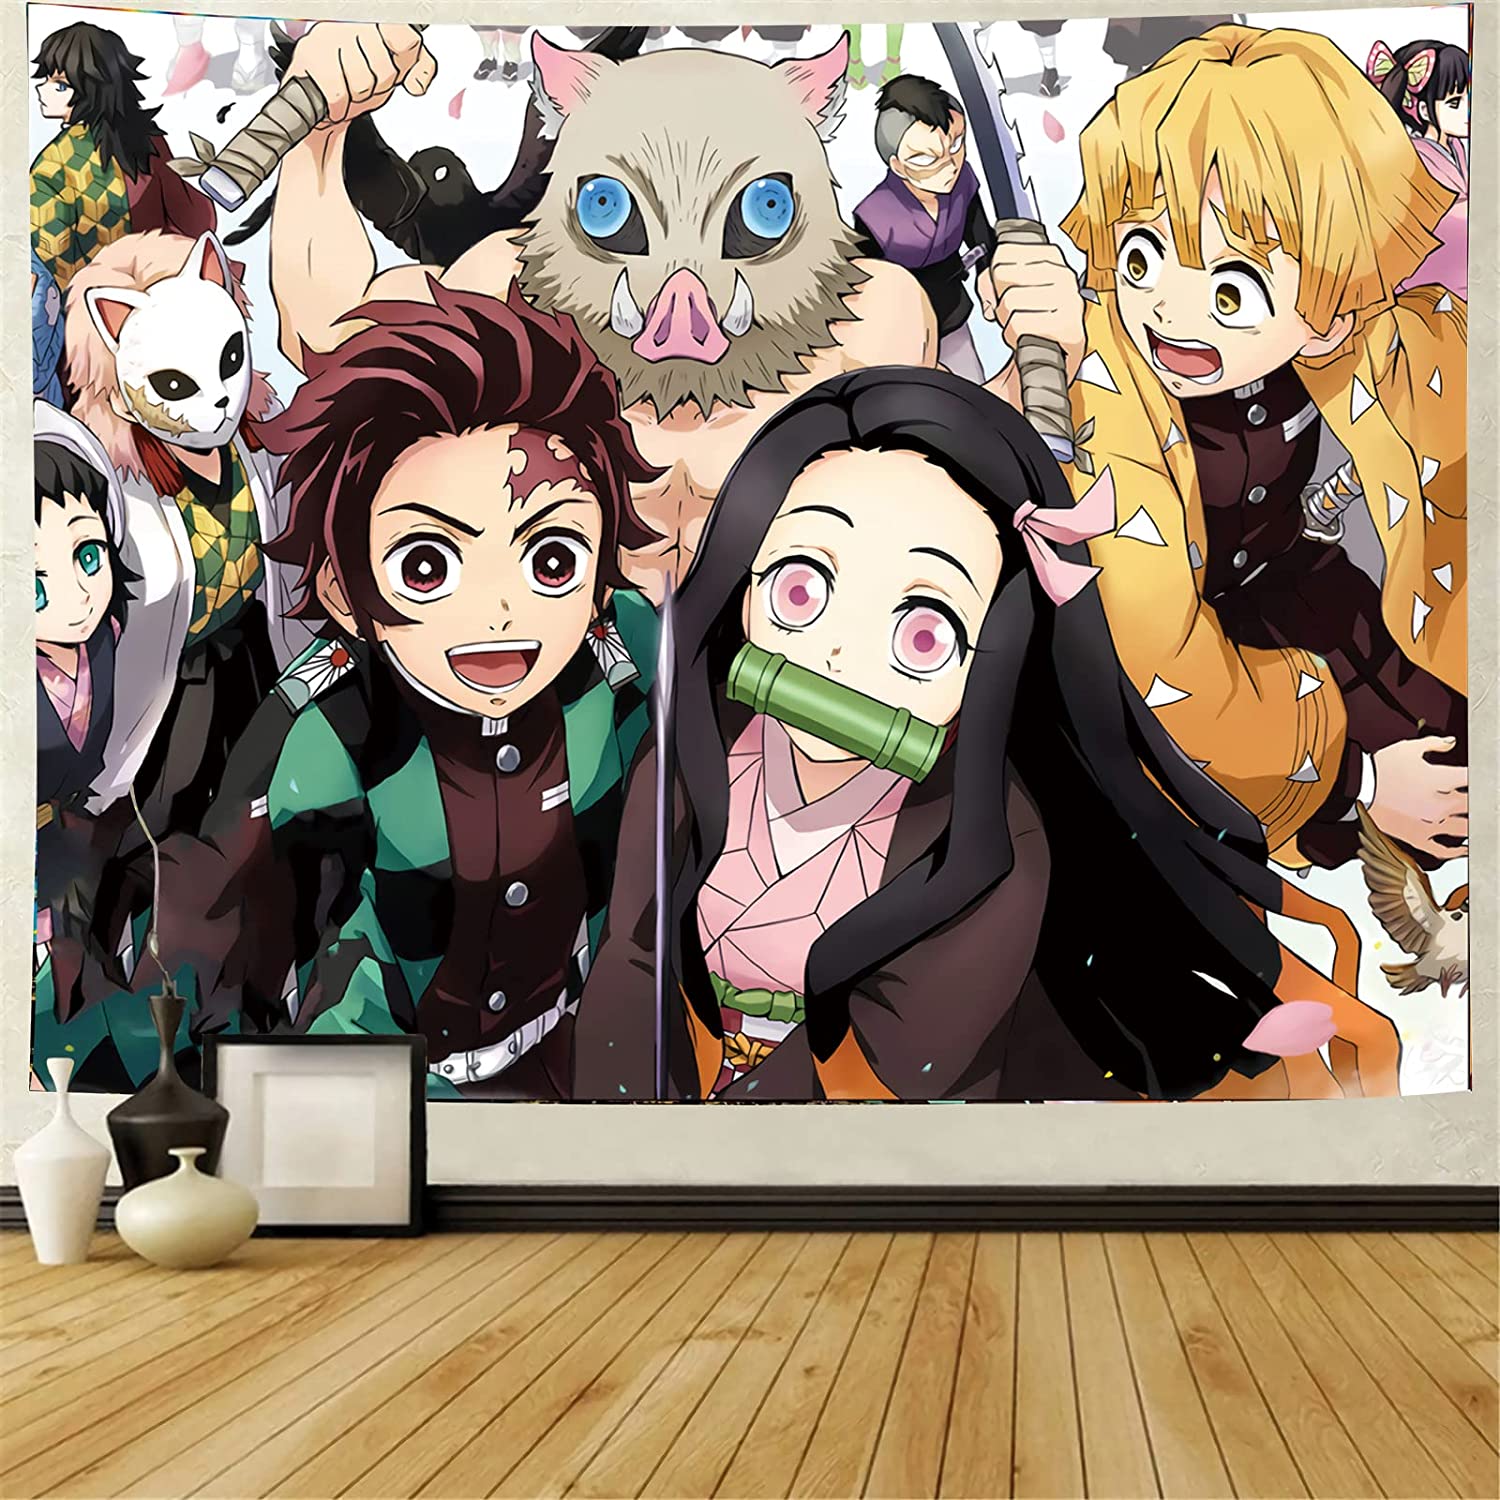 Anime Wall Tapestry Scroll 18x26 Wall Hanging Art Anime Scroll Tassels New   eBay